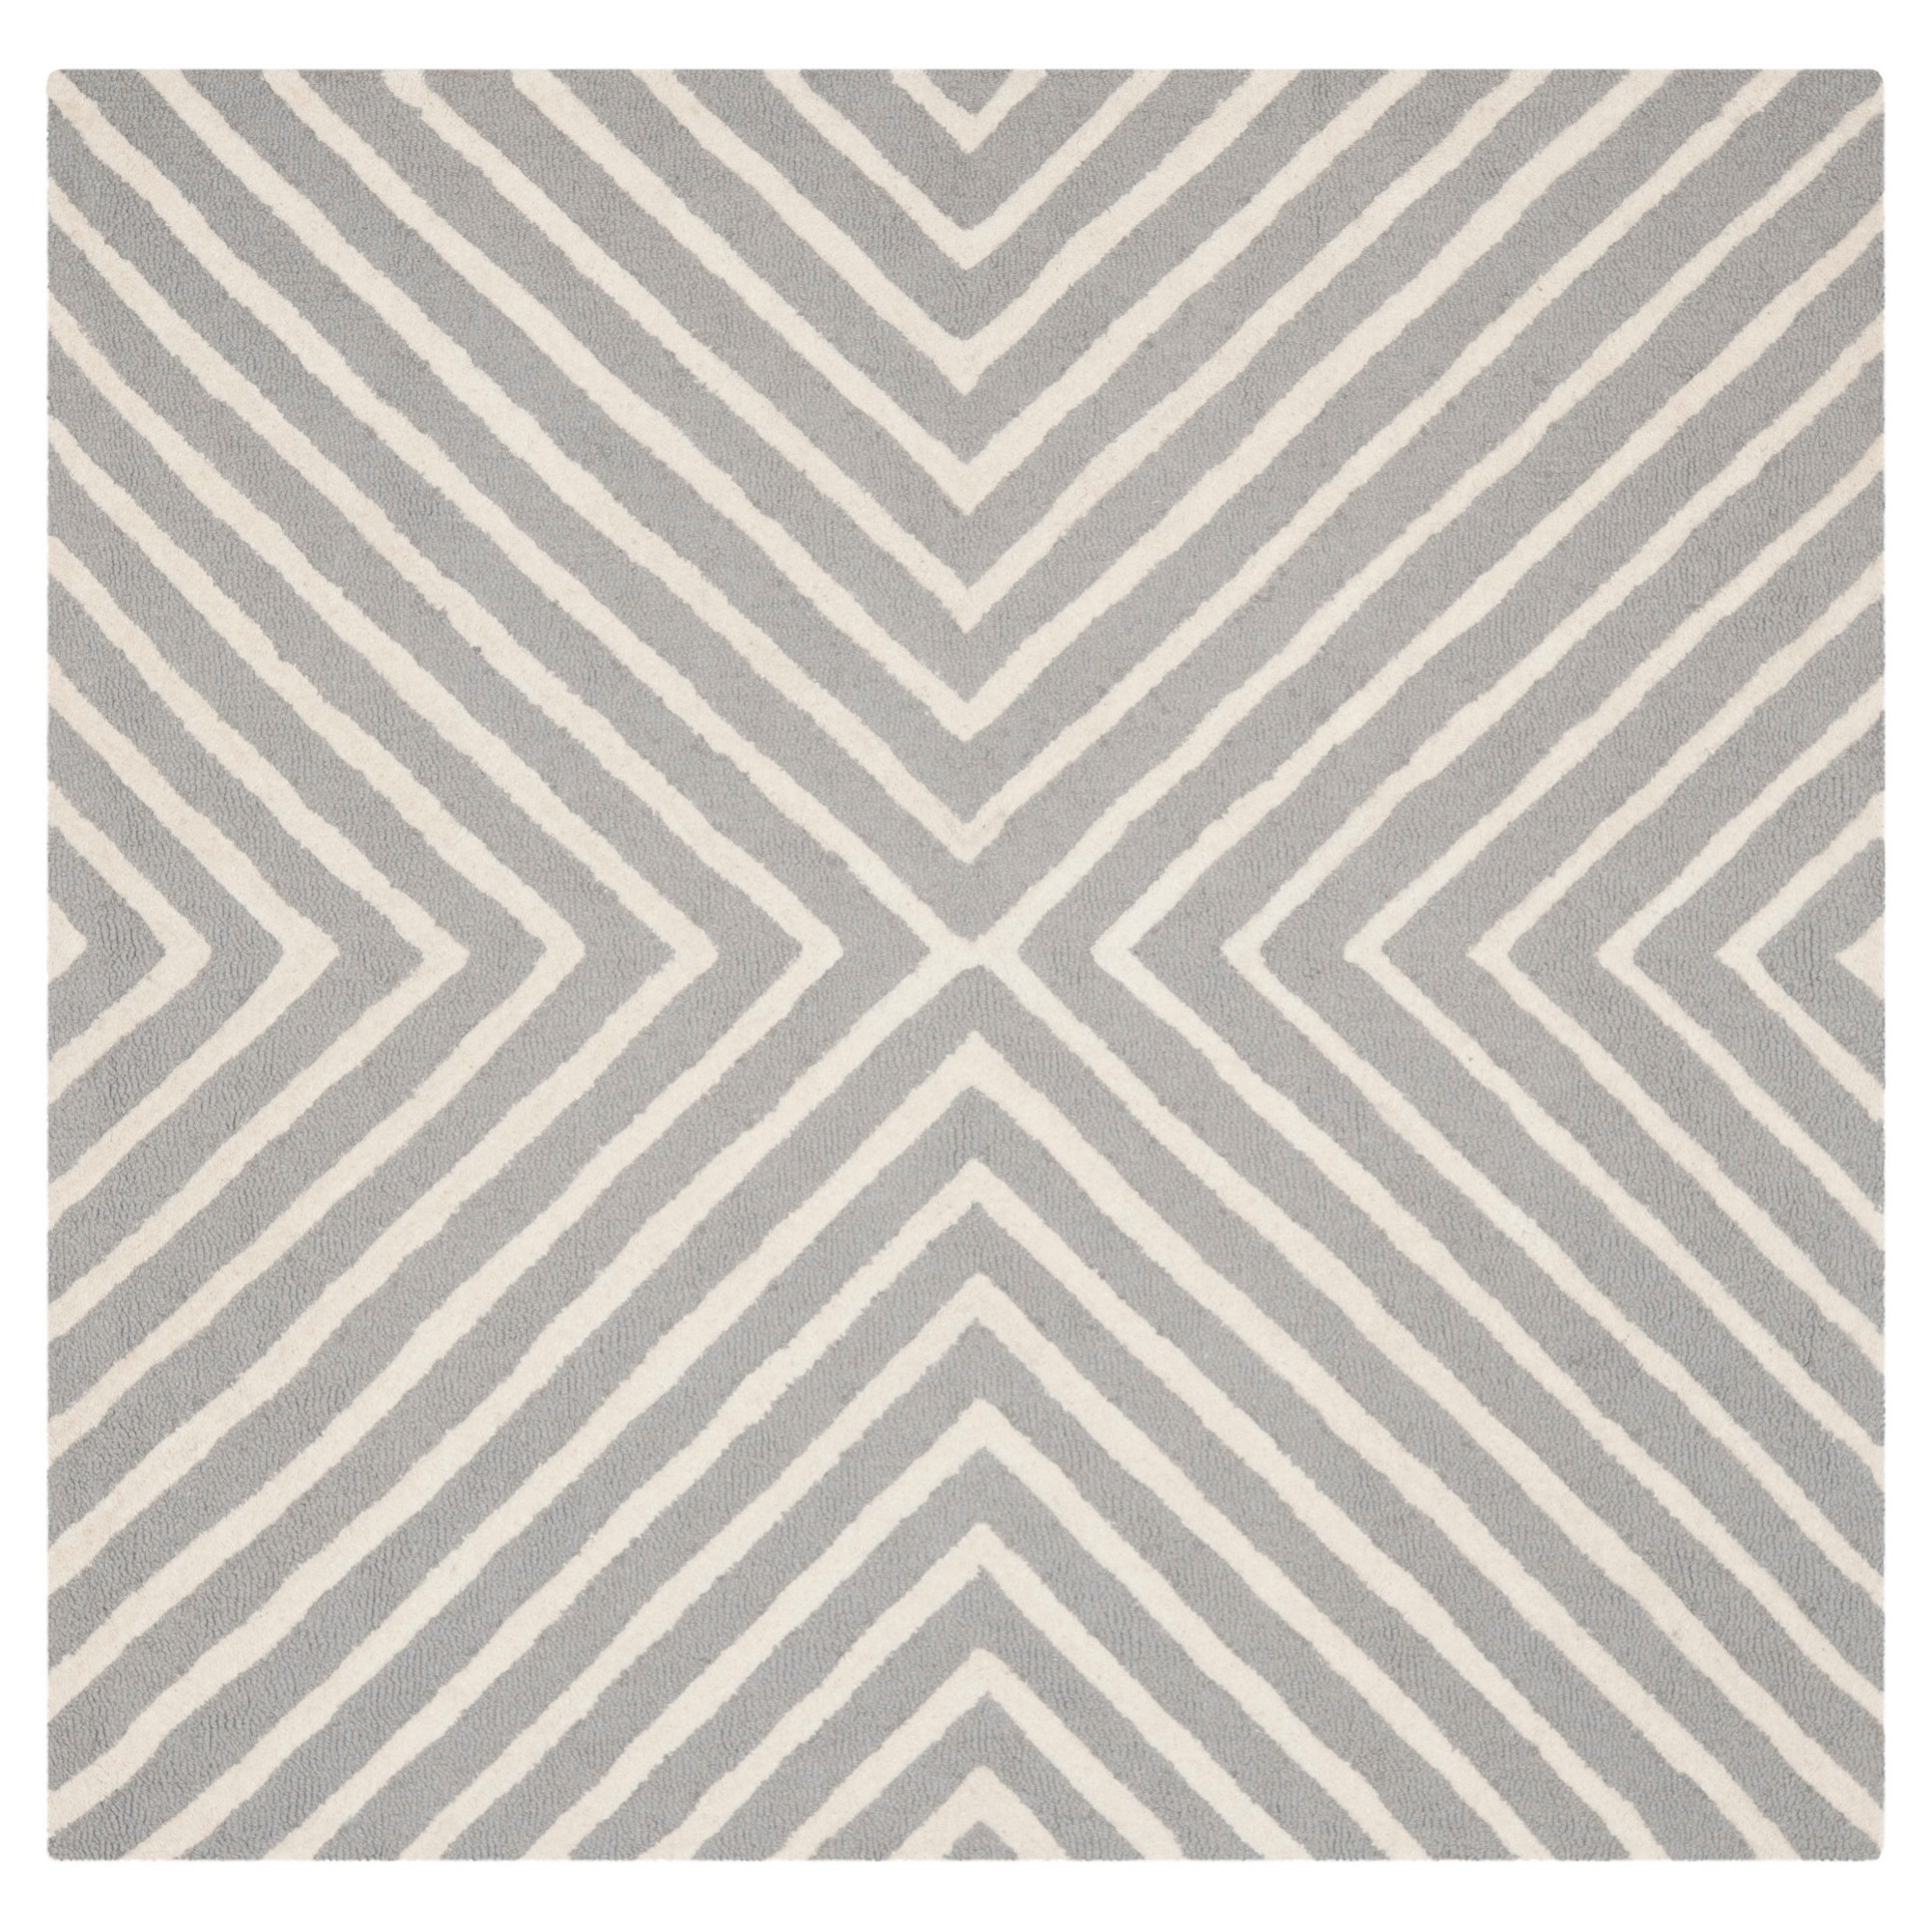 Harper Textured Area Rug - Silver/Ivory (6'x6'Square) - Safavieh